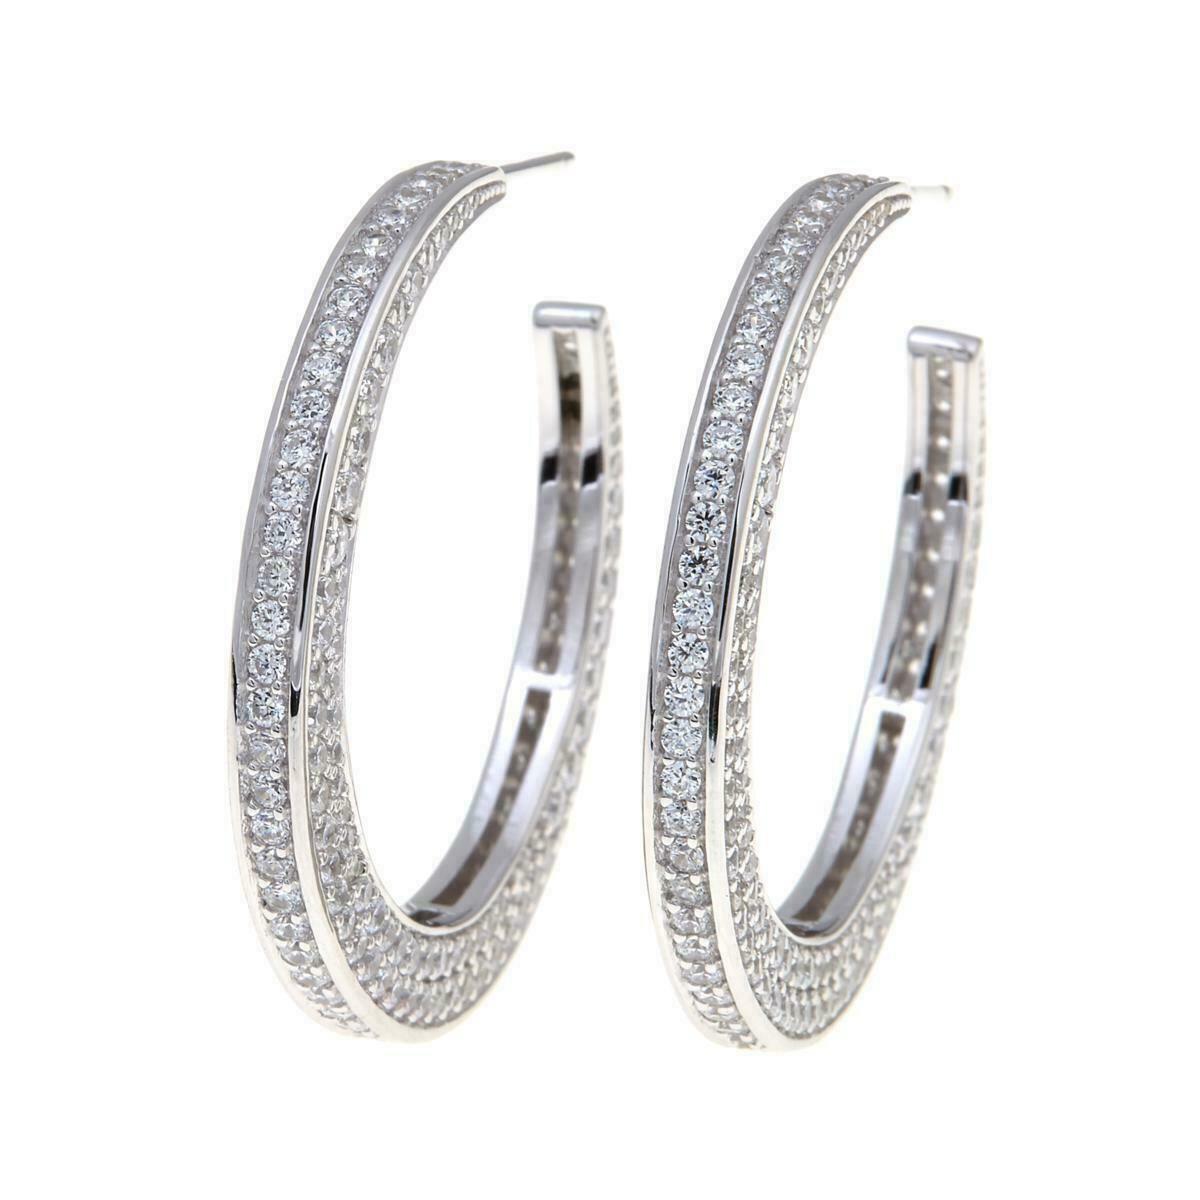 6.56ct Absolute Sterling Silver Pave Inside-Outside Hoop Earrings | Jewelry & Watches:Fashion Jewelry:Earrings